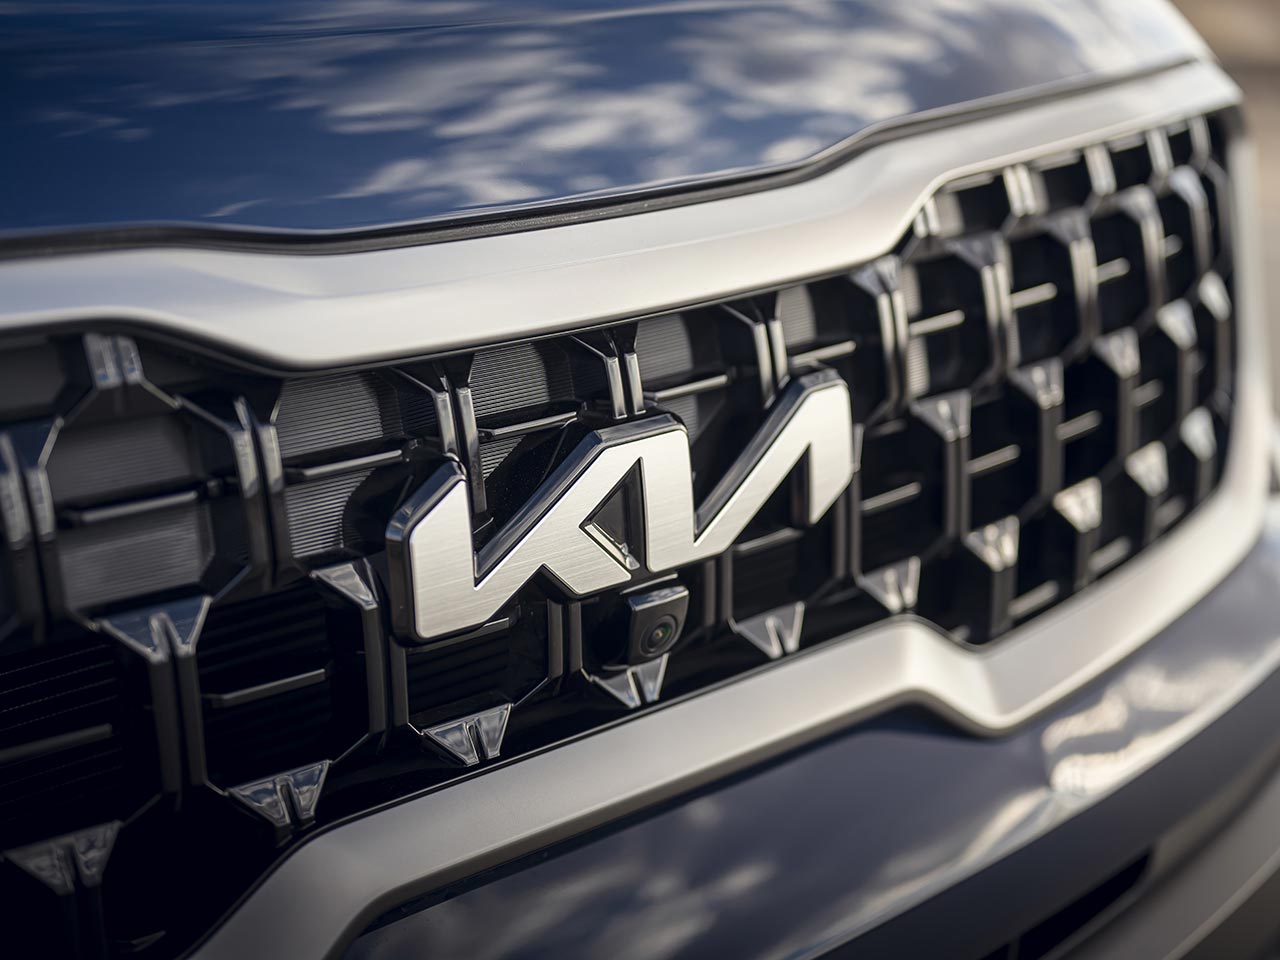 Projeto AY: Kia prepara SUV pequeno com proposta semelhante ao Suzuki Jimny Sierra